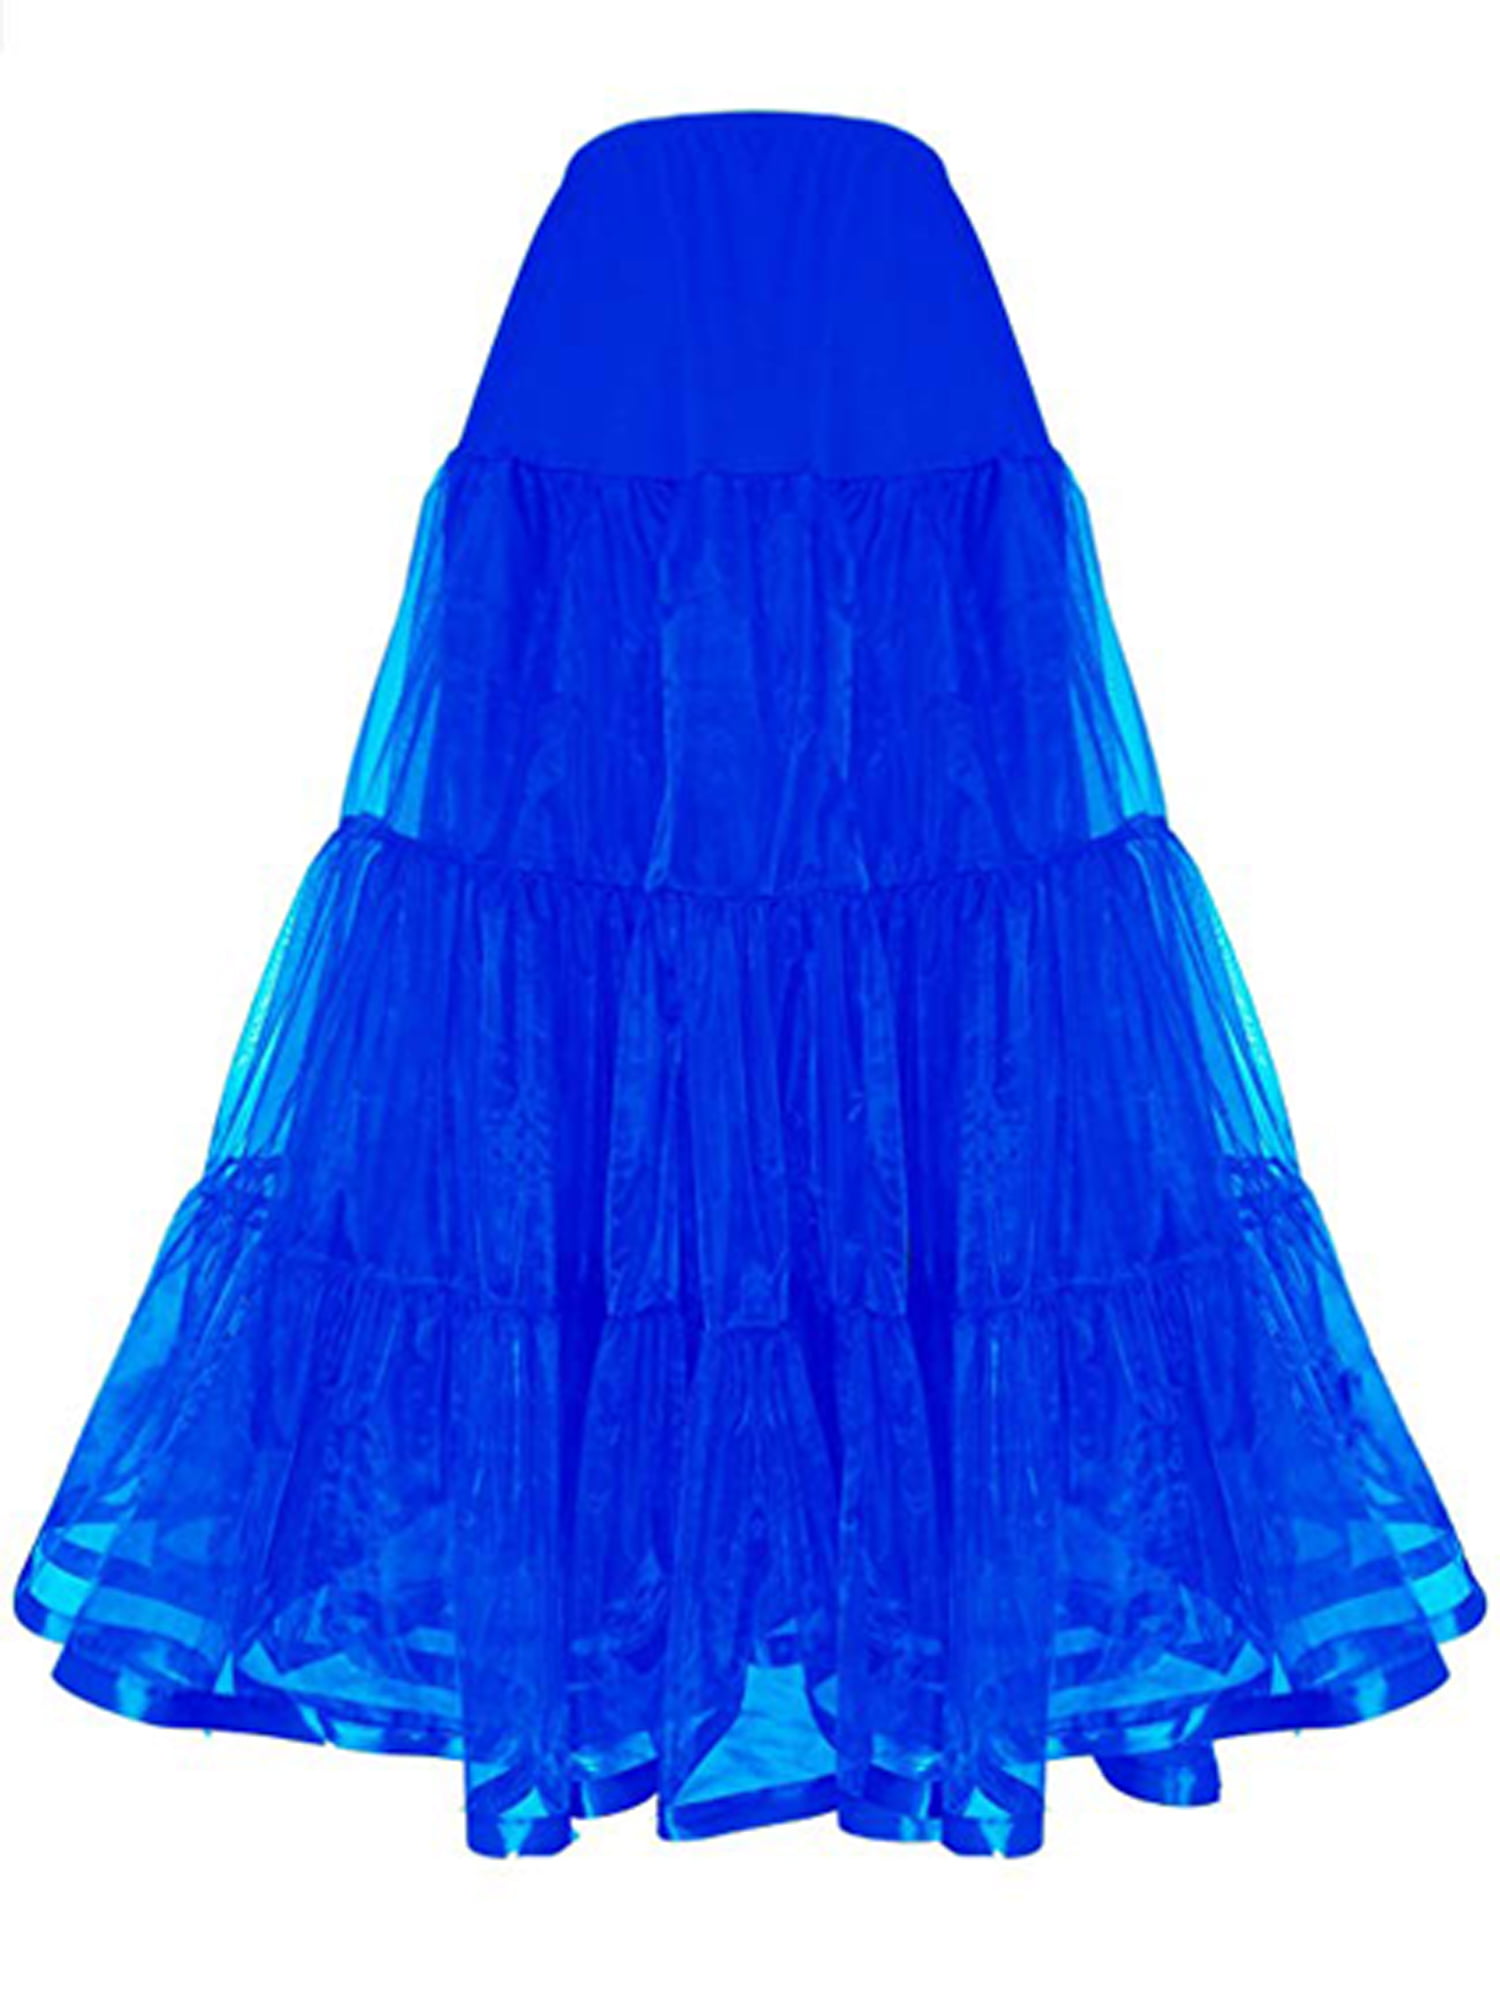 Shimaly Women's Floor Length Wedding Petticoat Long Underskirt for Formal Dress S-3XL 